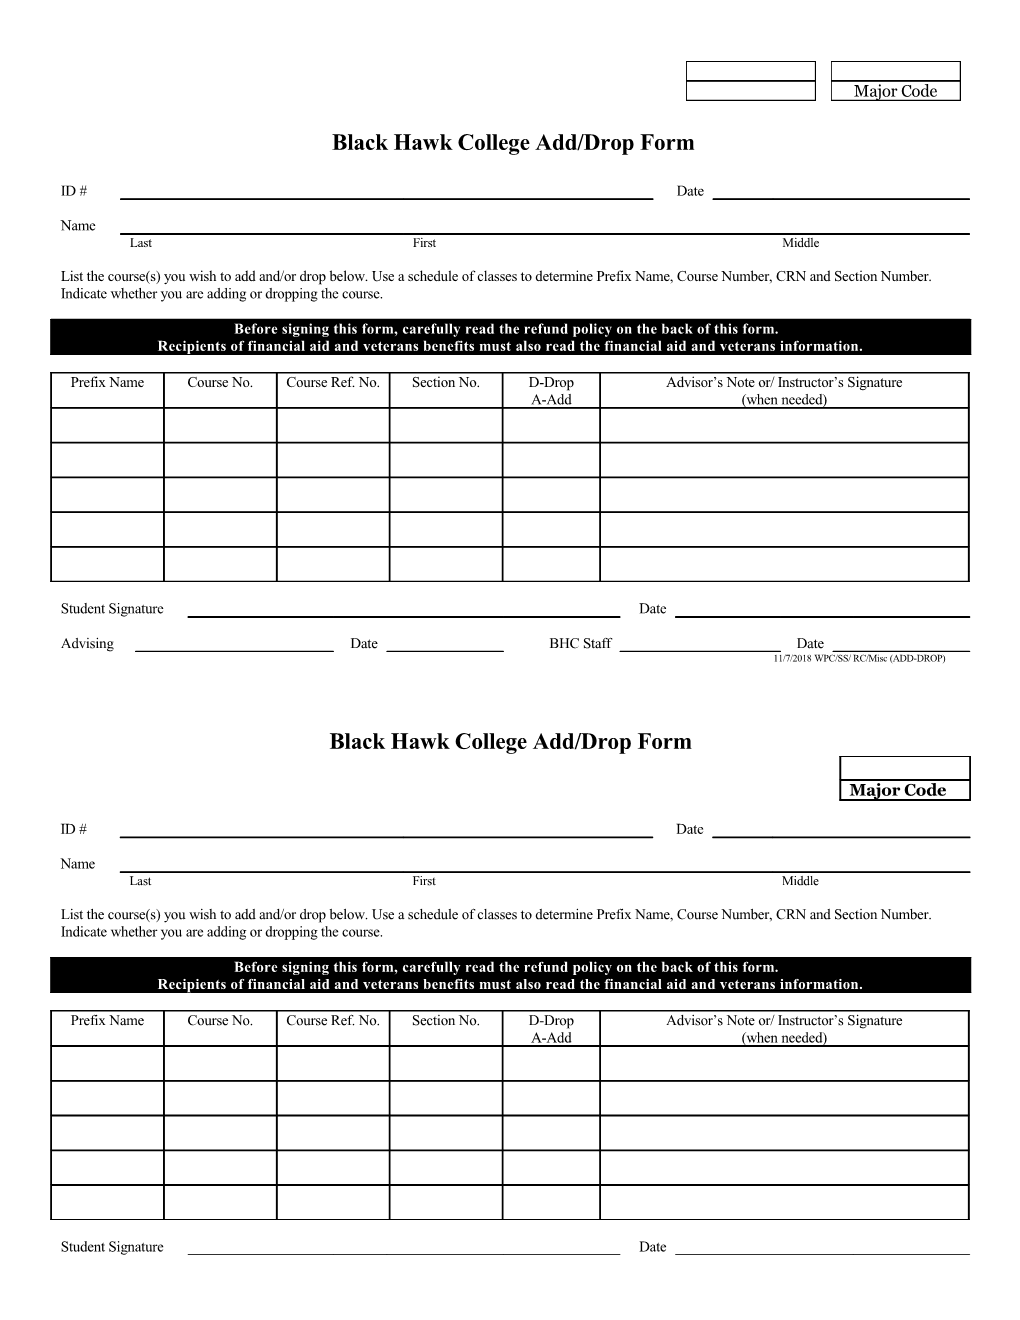 Black Hawk College Add/Drop Form